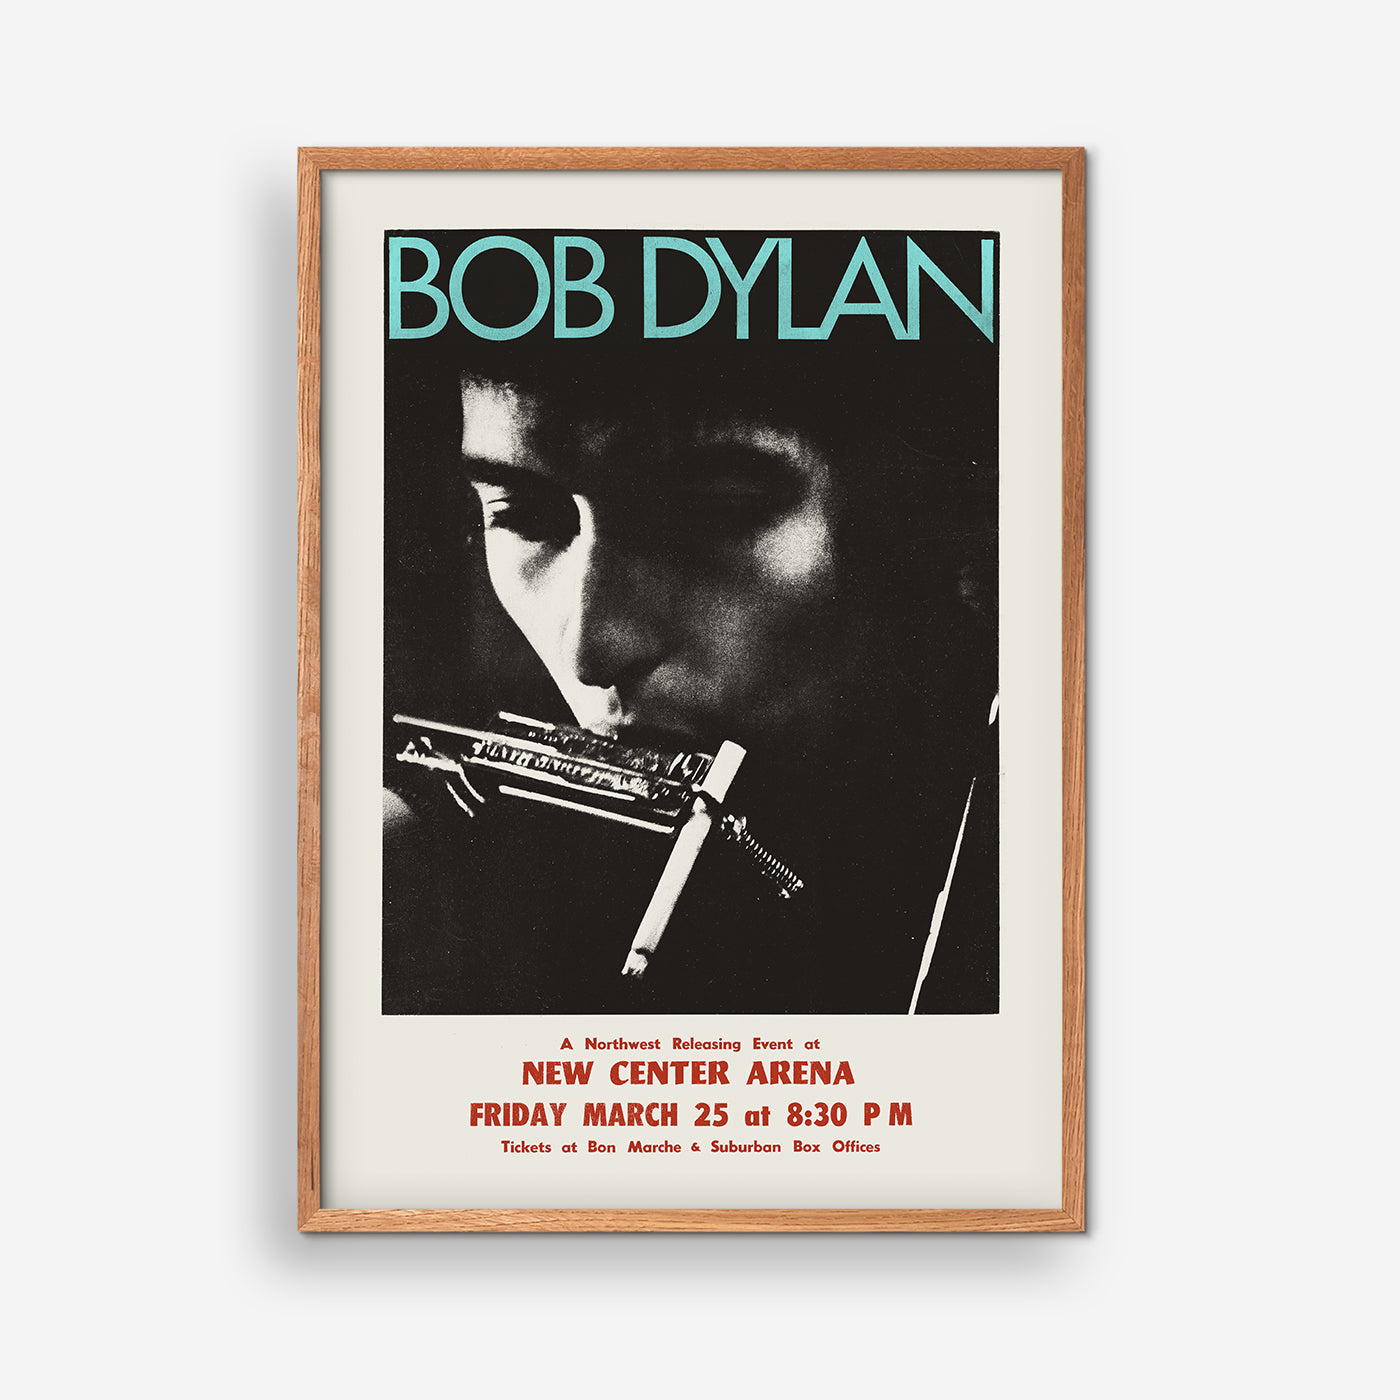 A Northwest Releasing Event - Bob Dylan